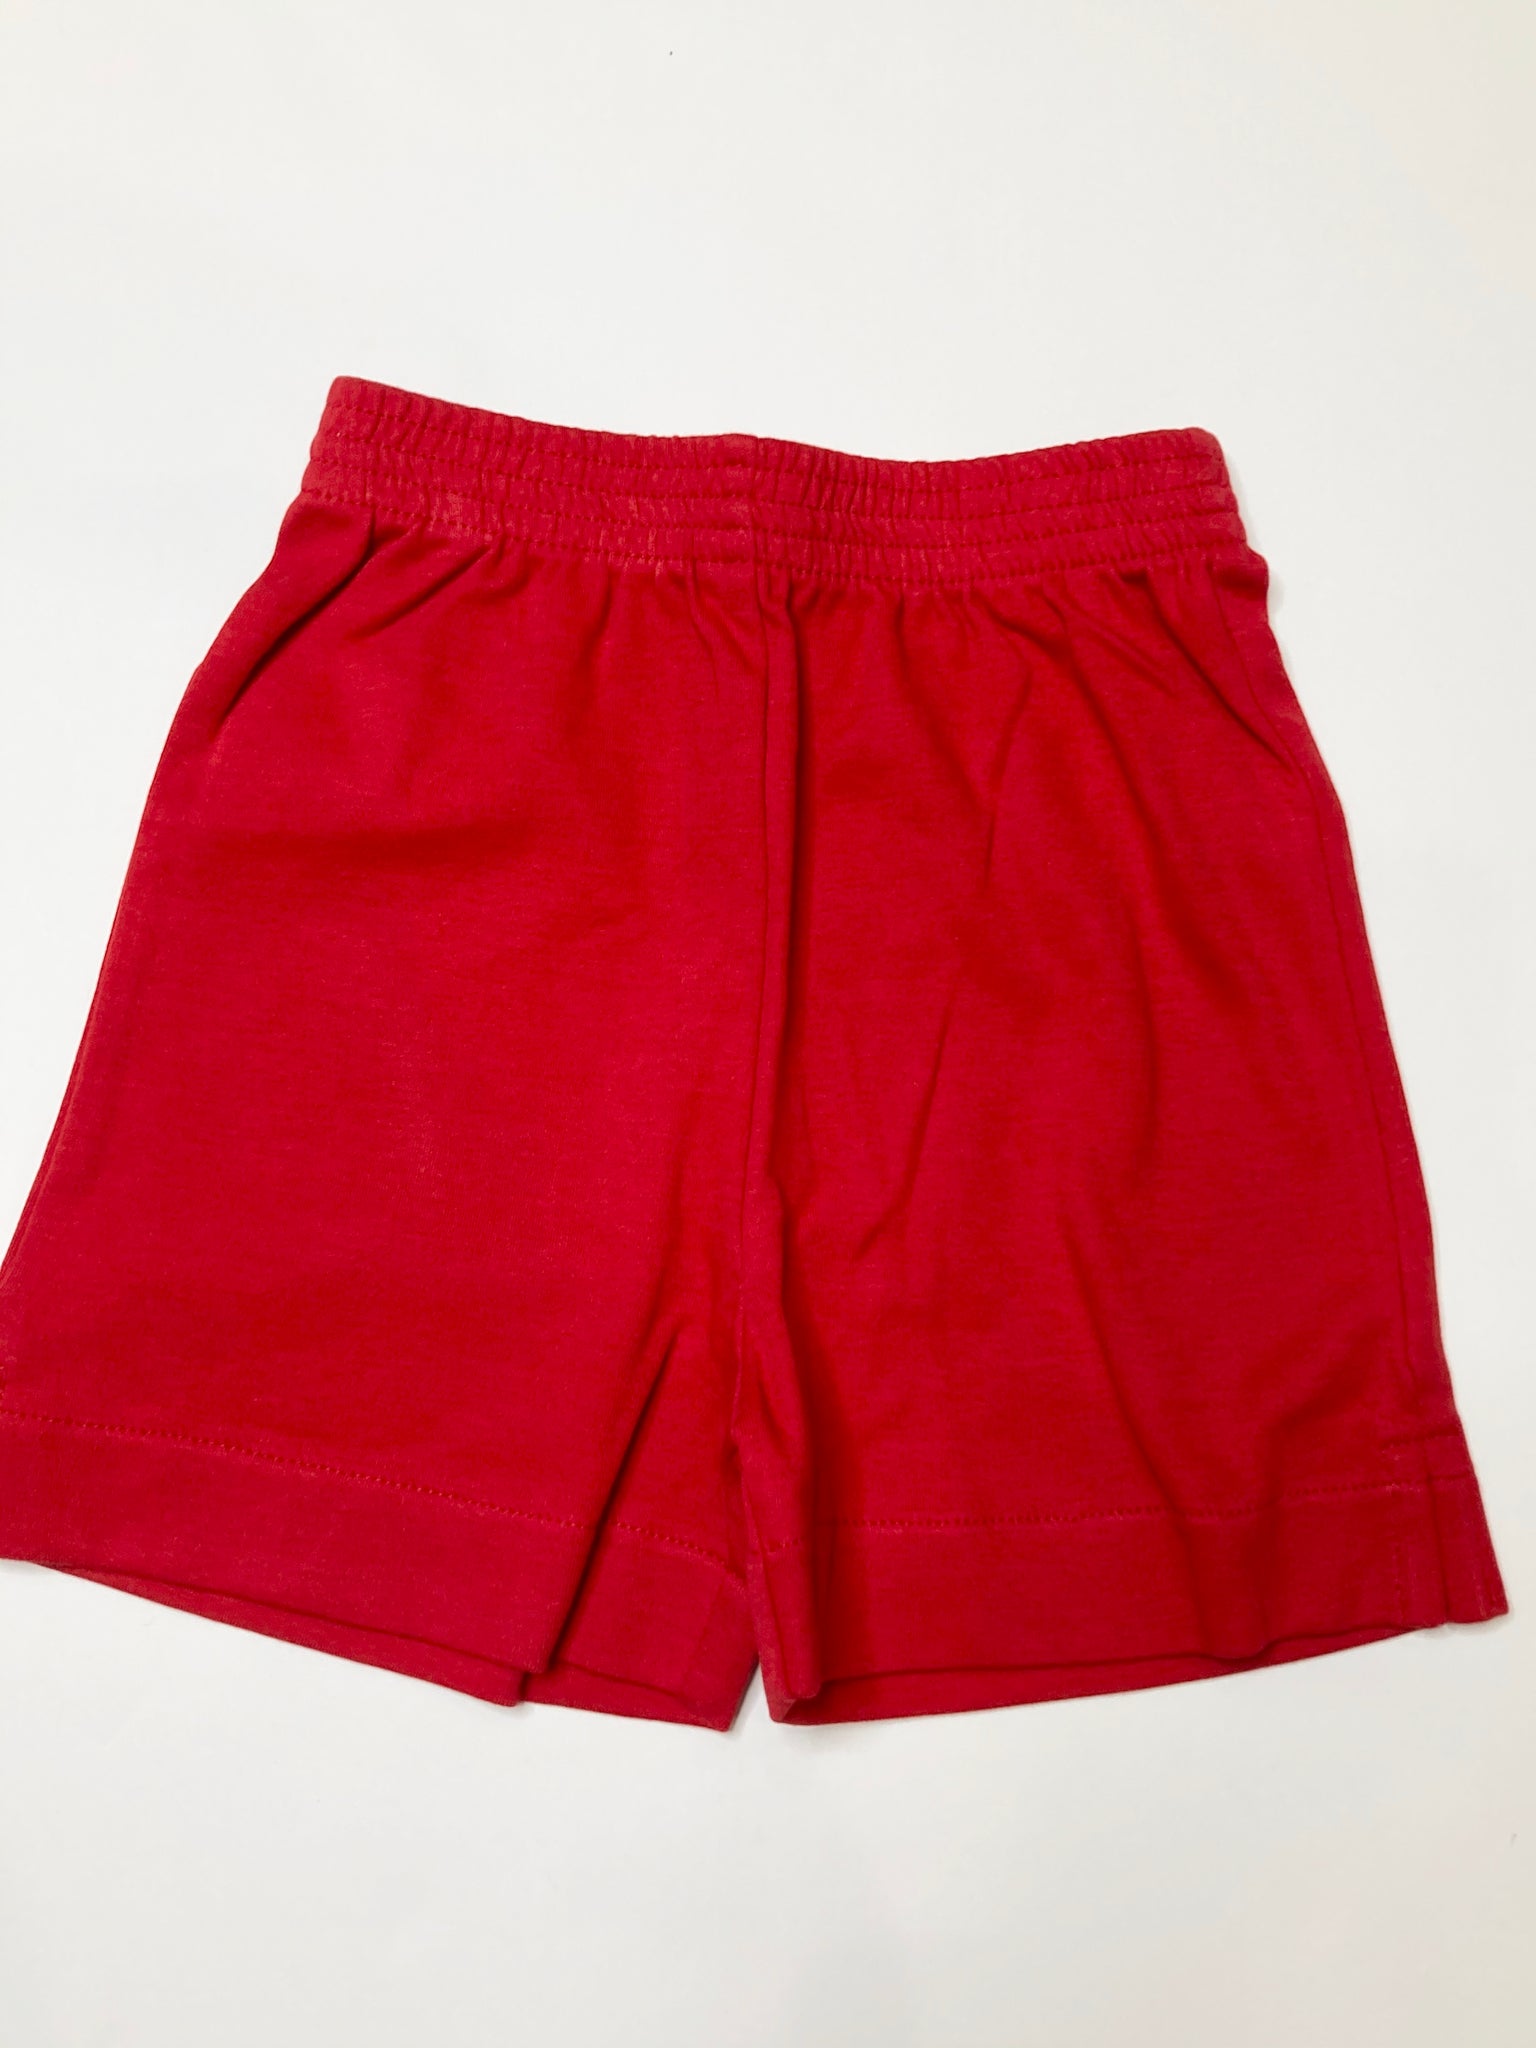 Luigi Red Shorts